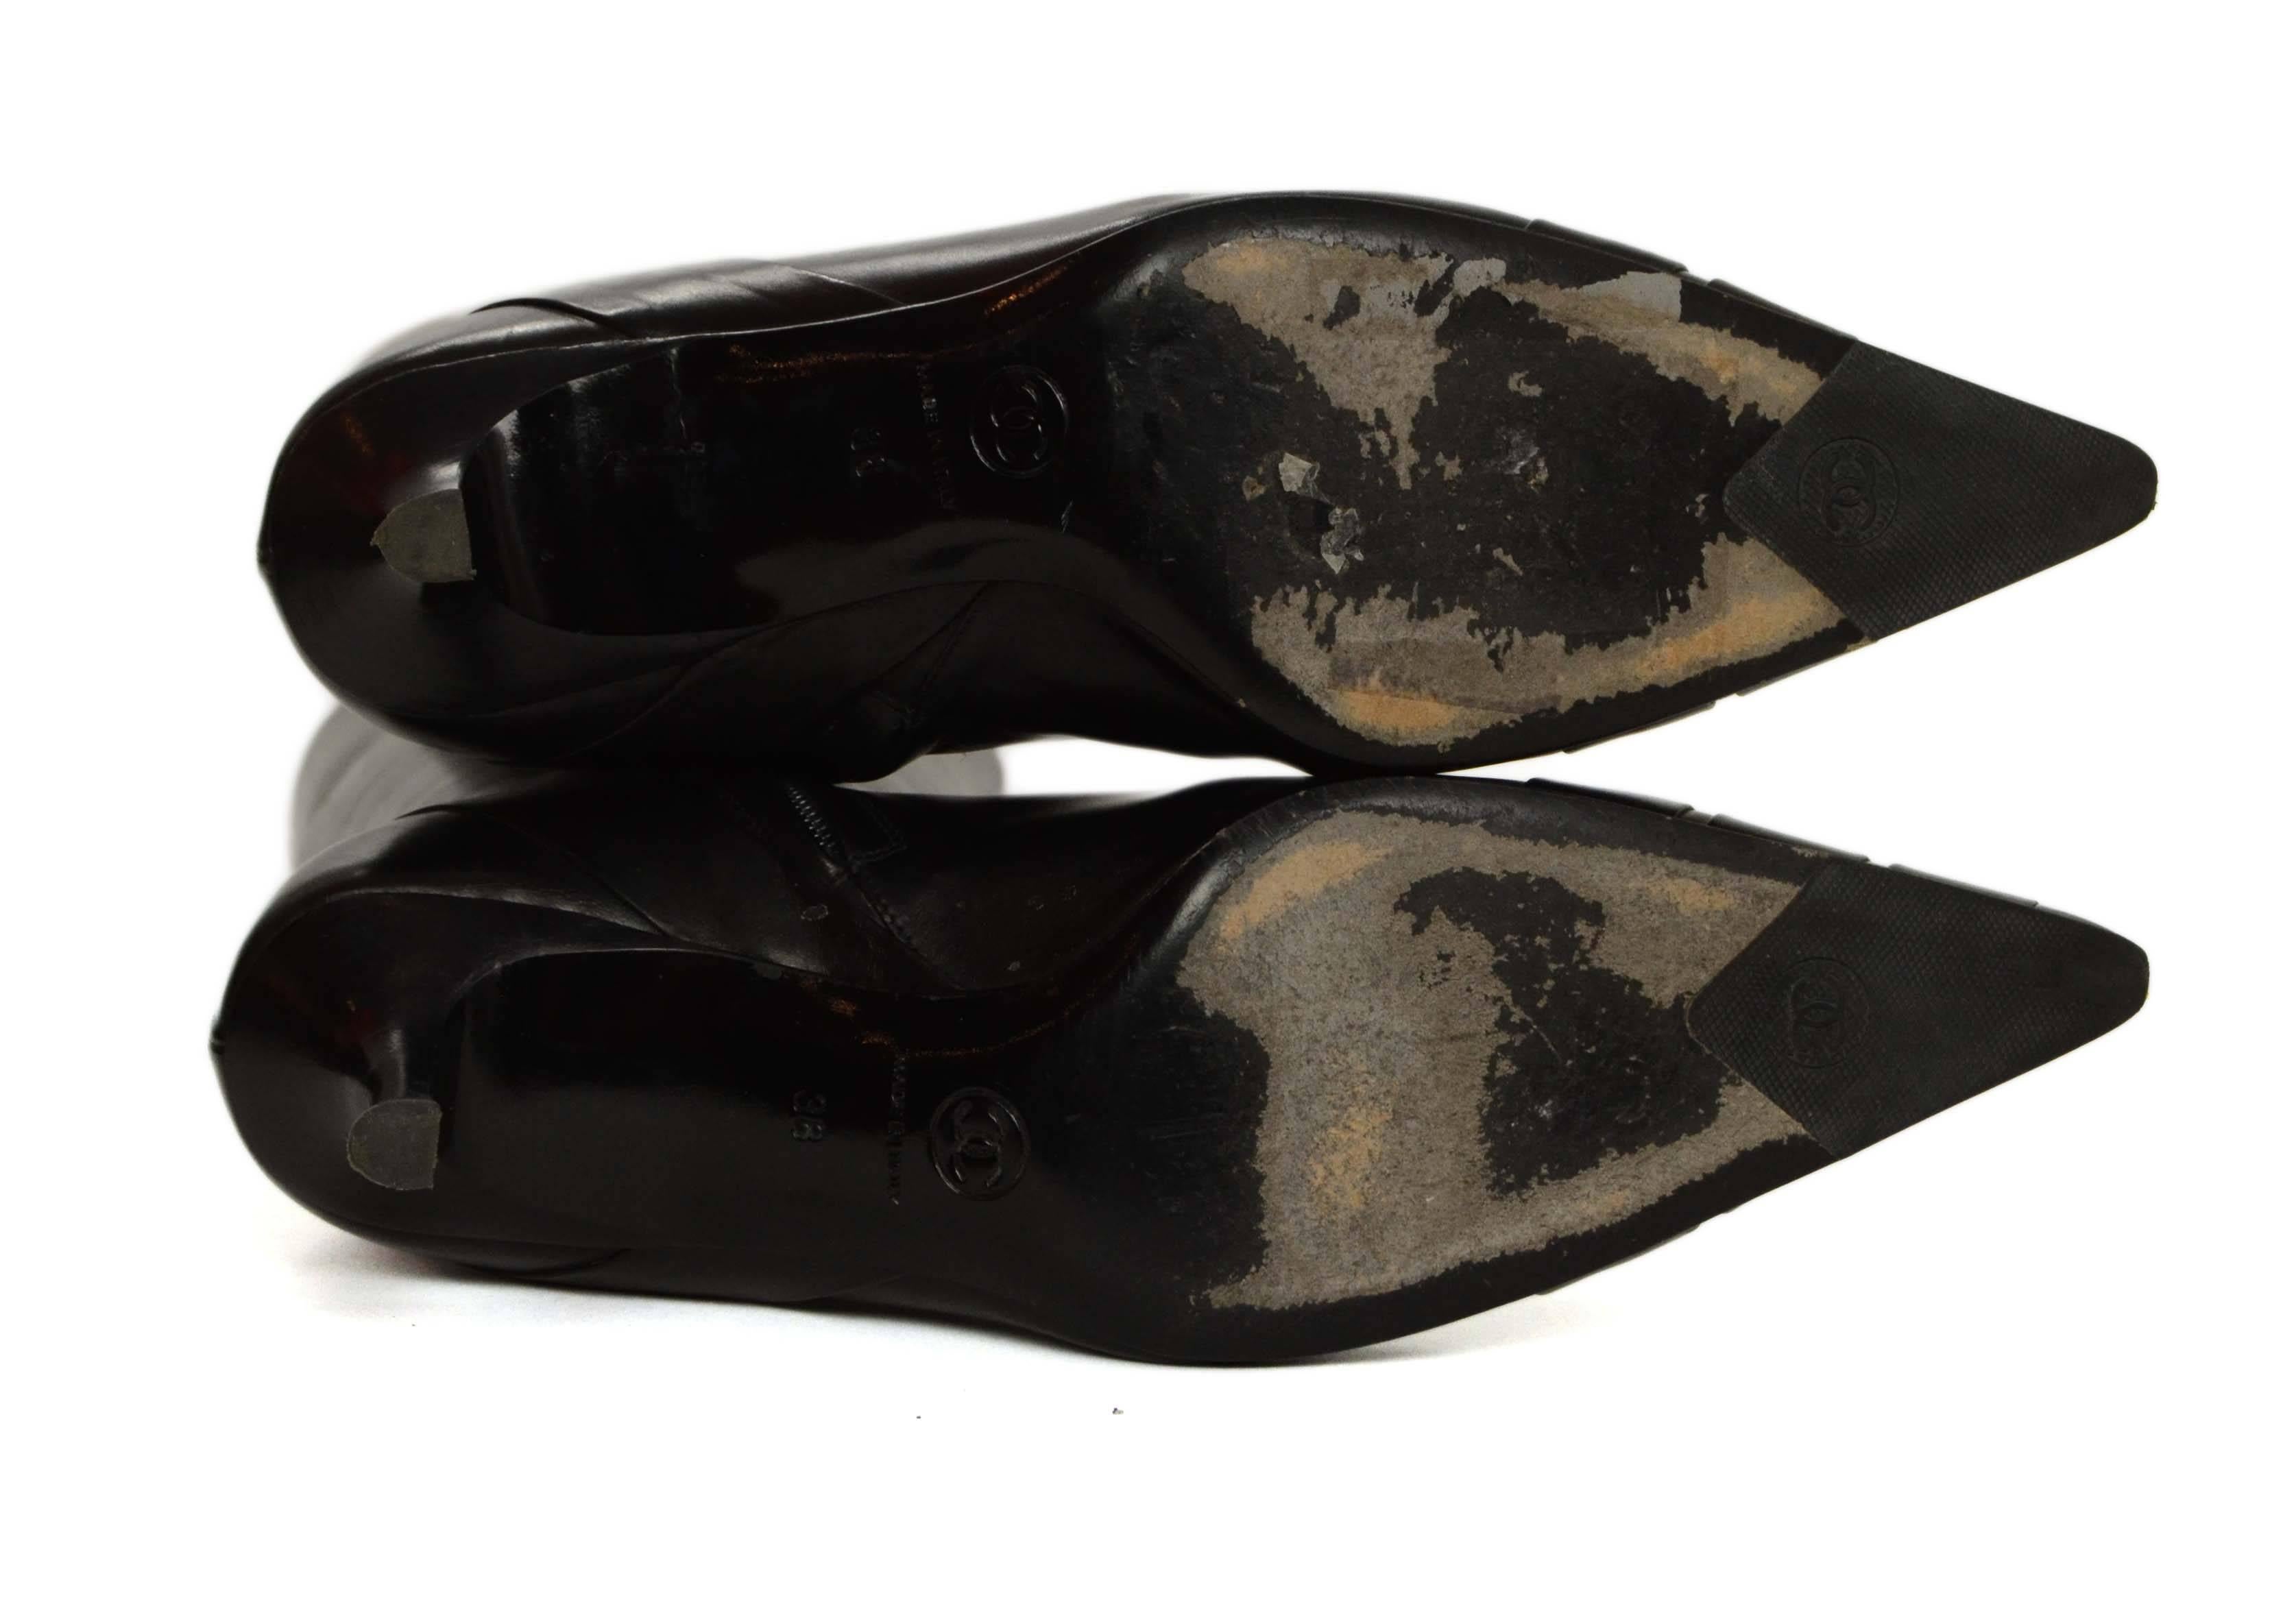 Chanel Black Leather Kitten Heel Knee-High Boots sz 38 1